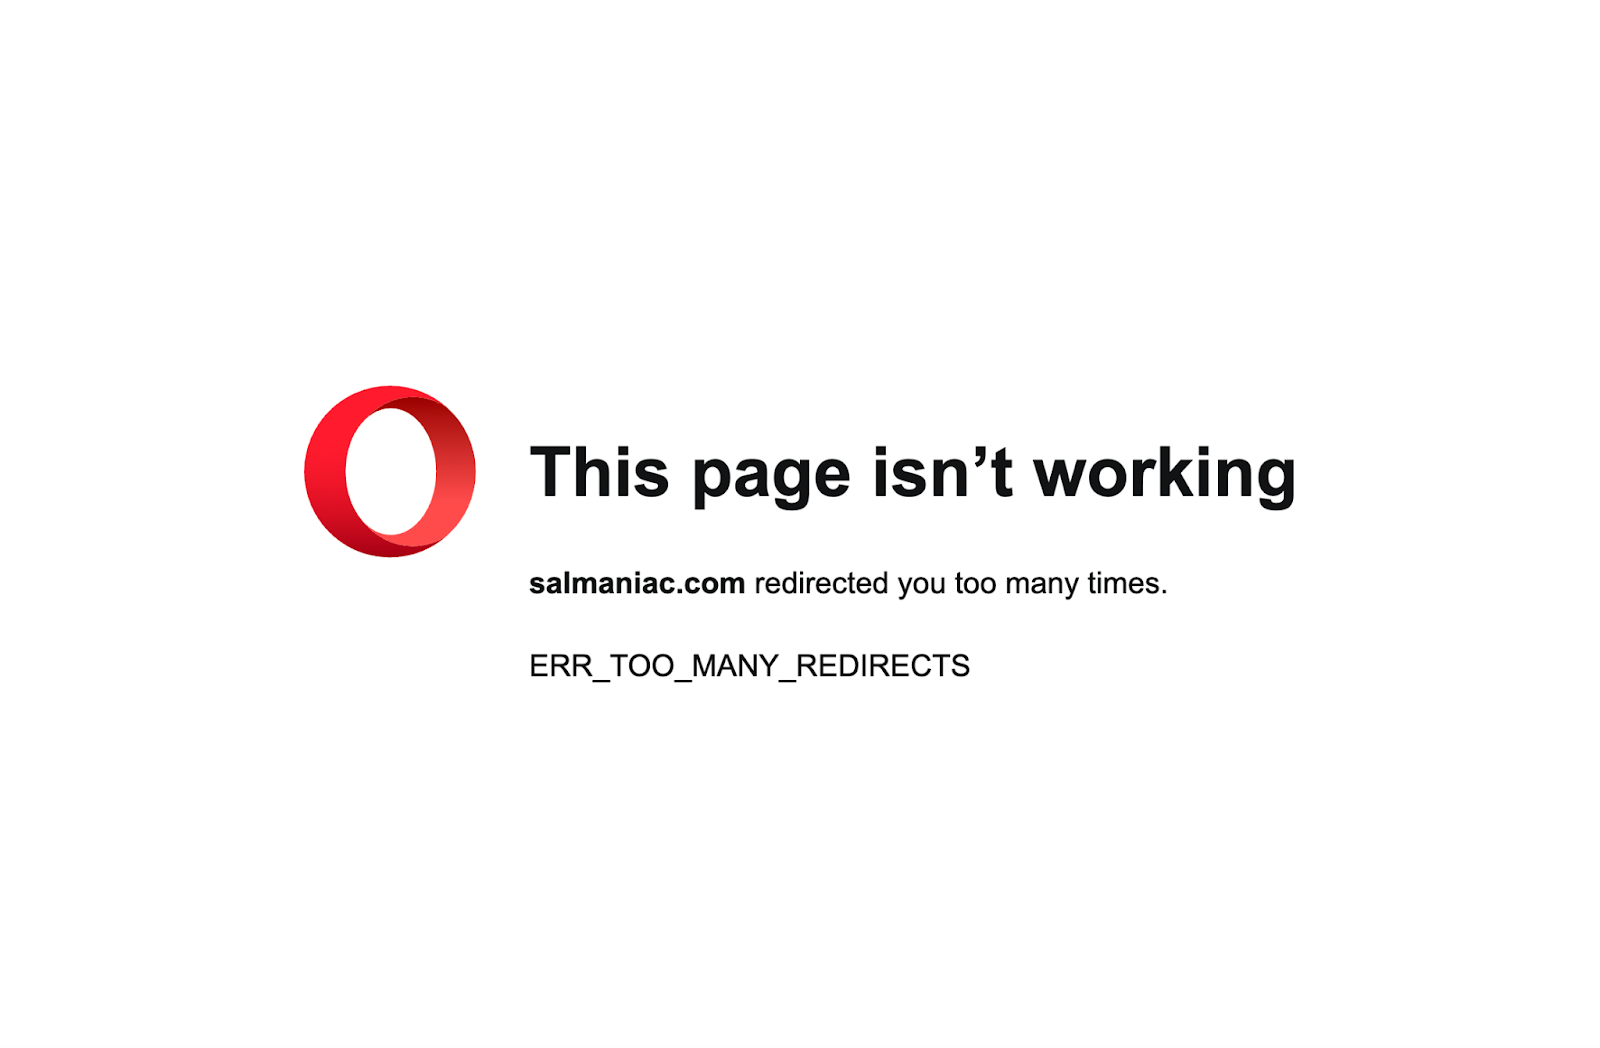 ERR_TOO_MANY_REDIRECTS error in Opera